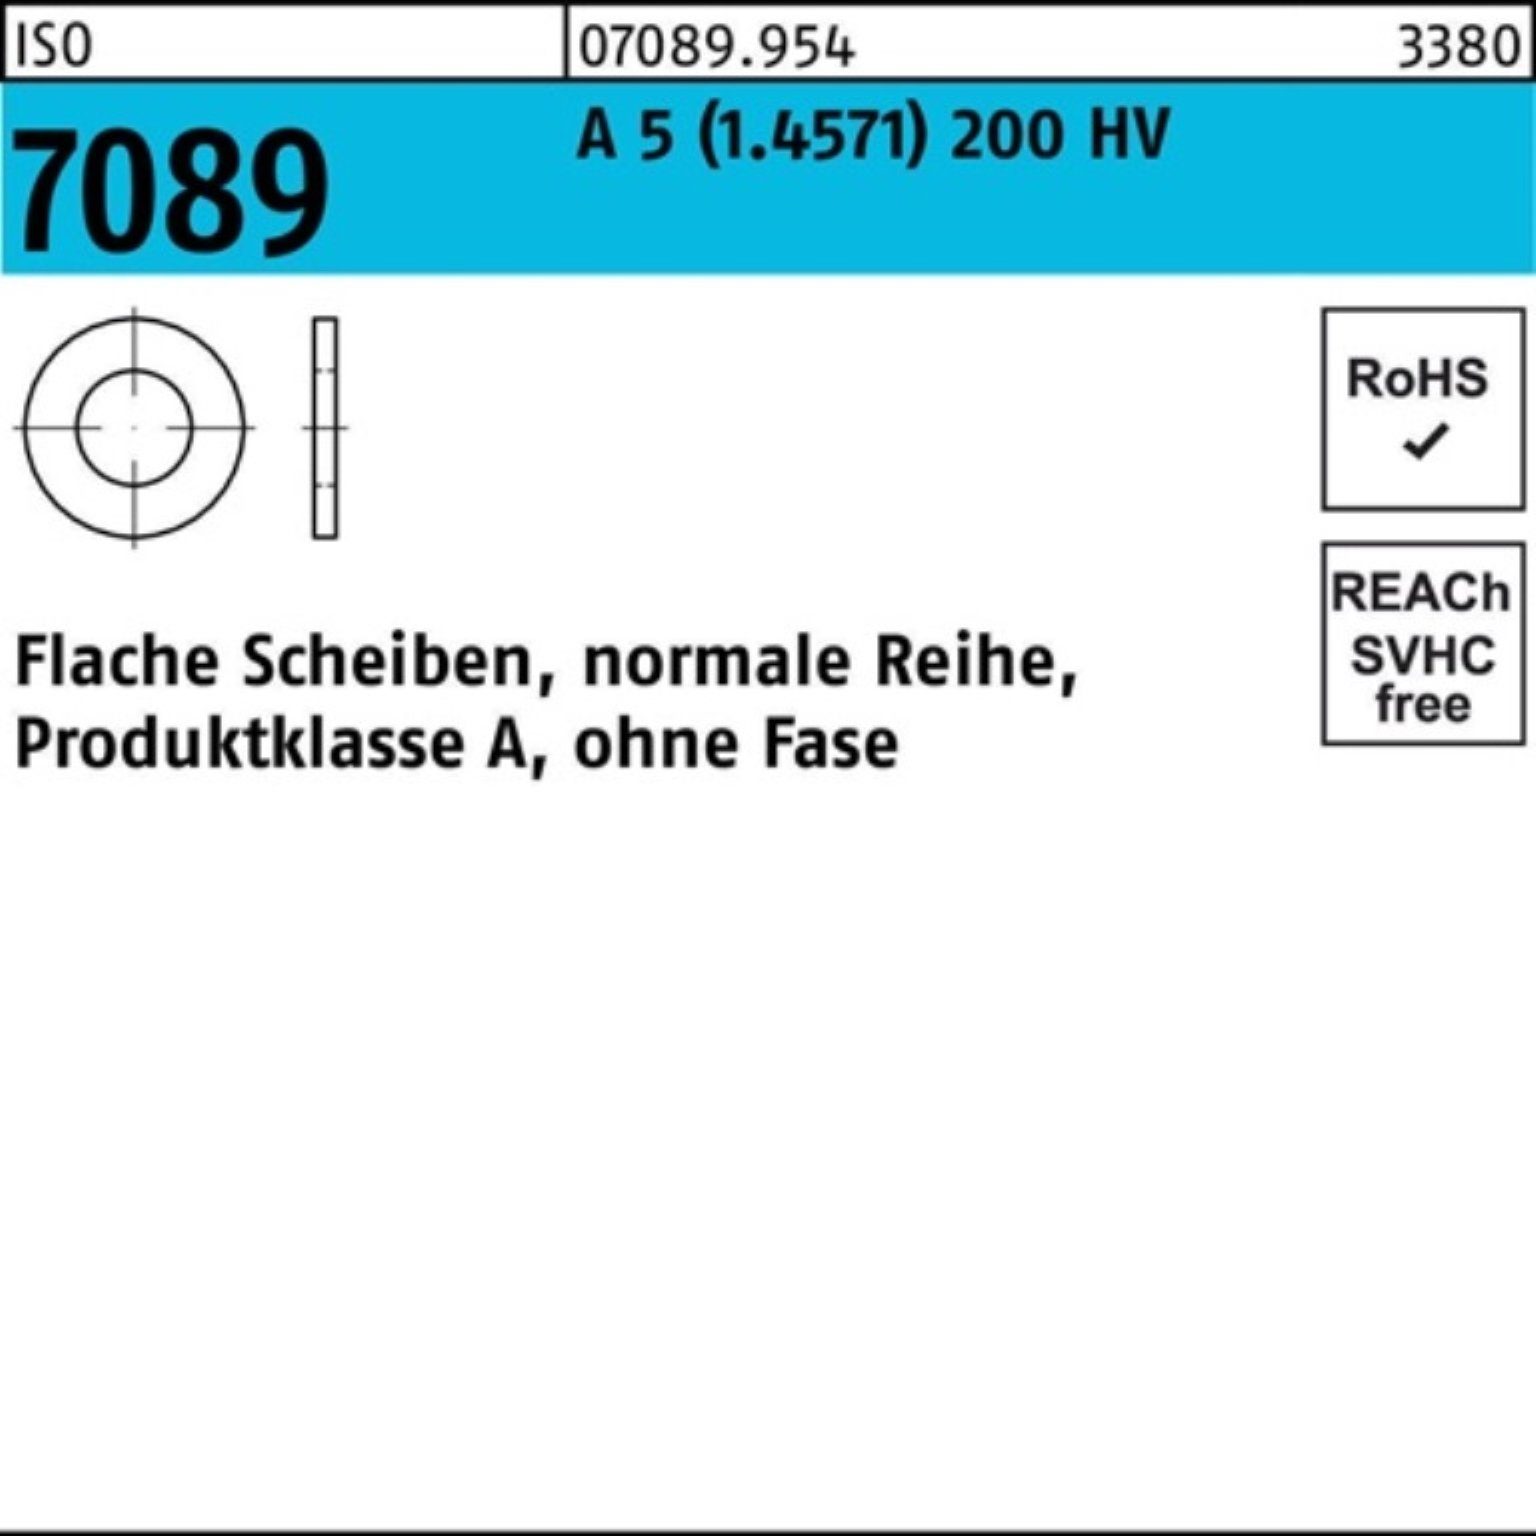 5 Unterlegscheibe 100 (1.4571) o.Fase S 100er 7089 ISO 8 Unterlegscheibe A HV Pack Bufab 200